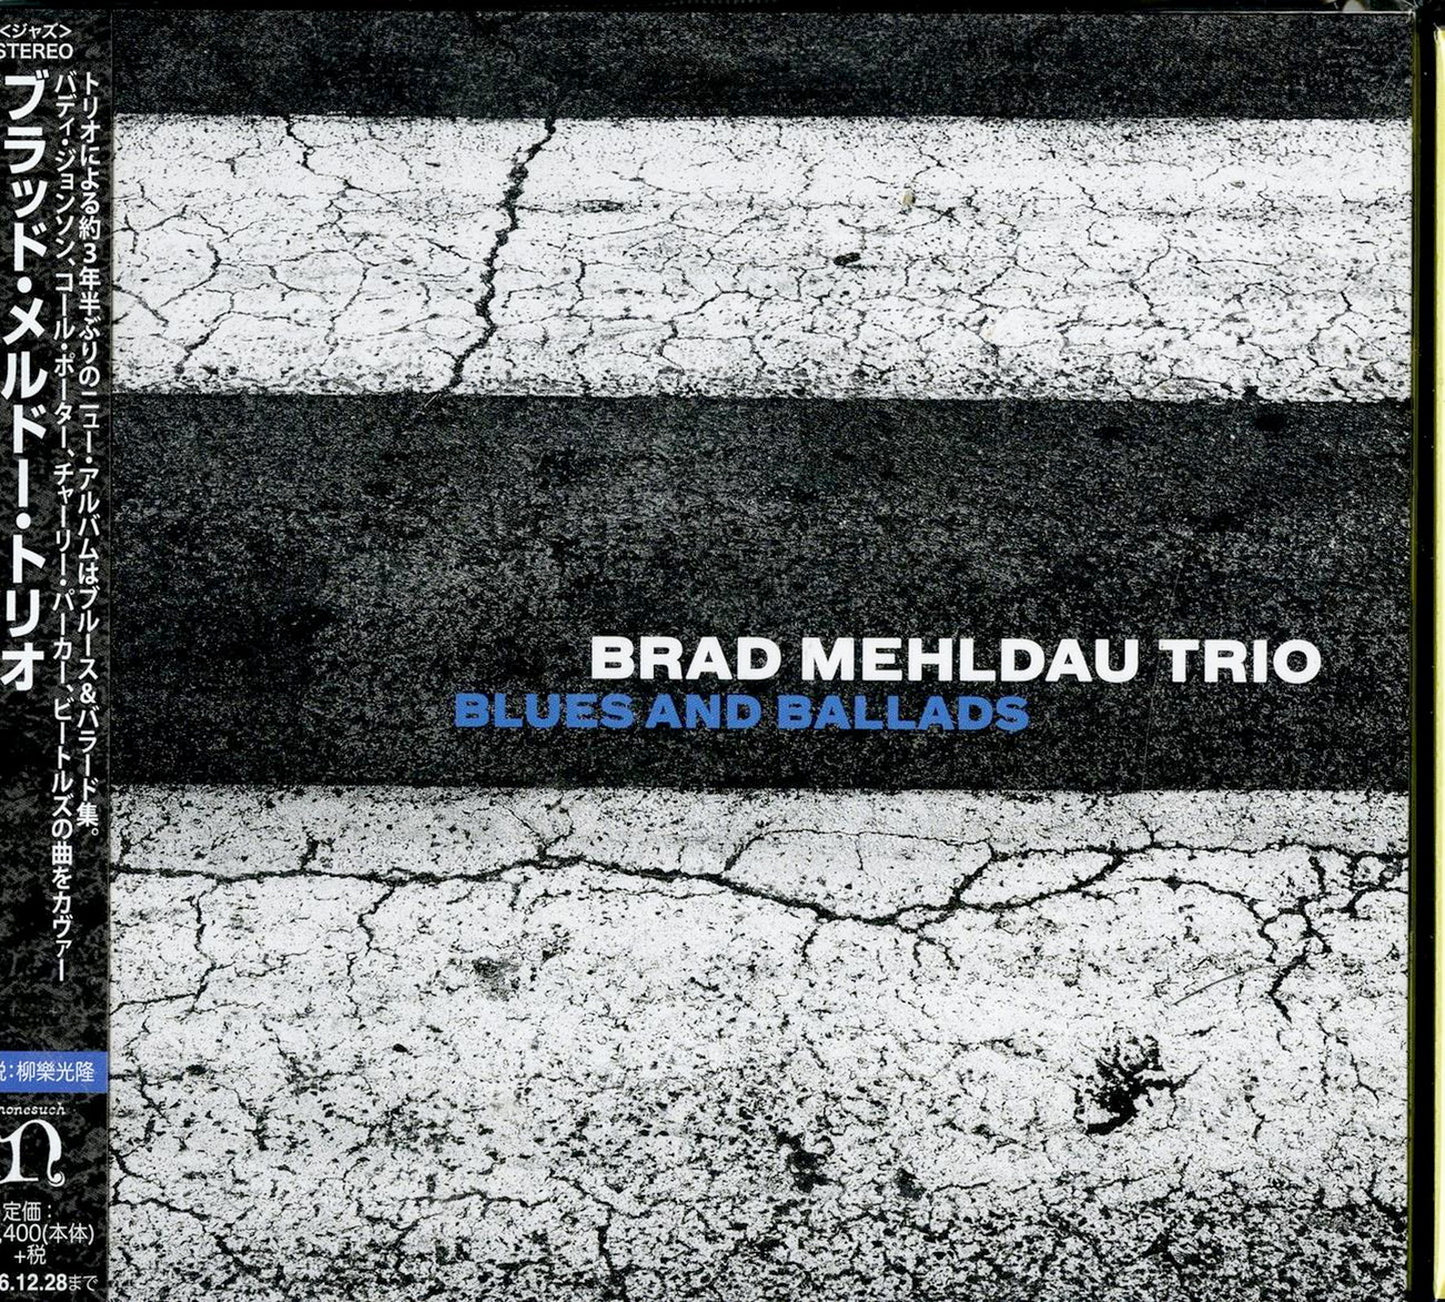 Brad Mehldau Trio - Blues And Ballads - Japan CD